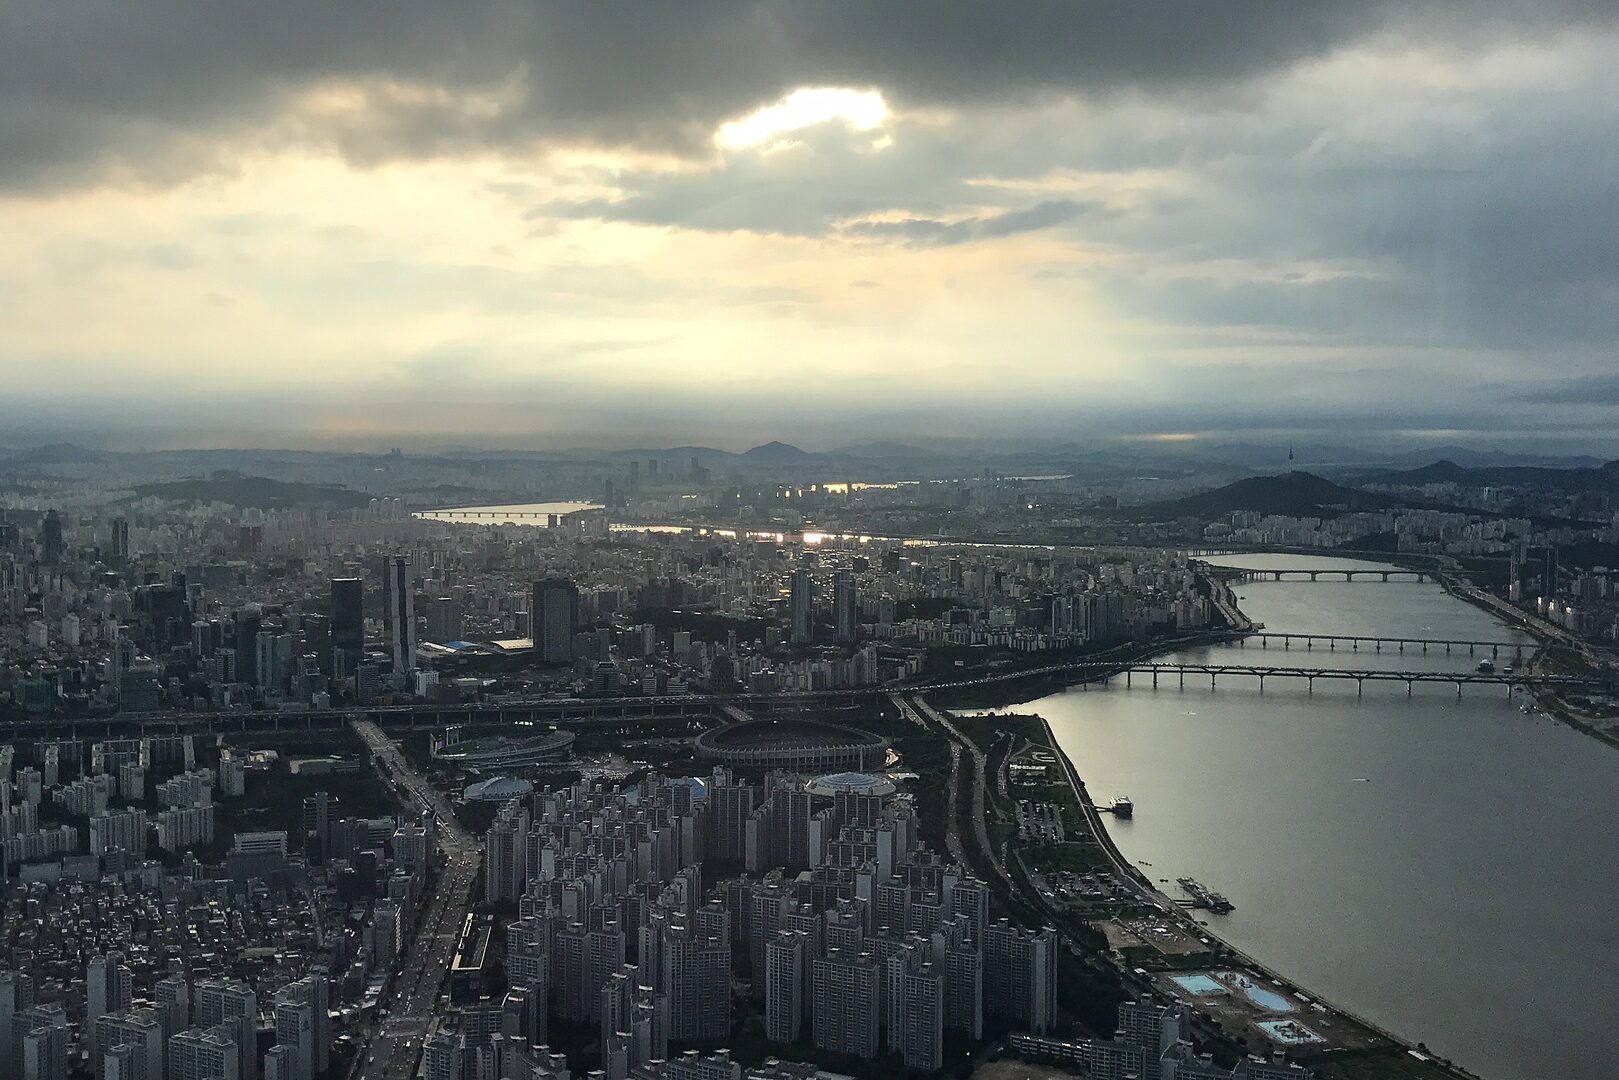 Seoul, Korea Skyline